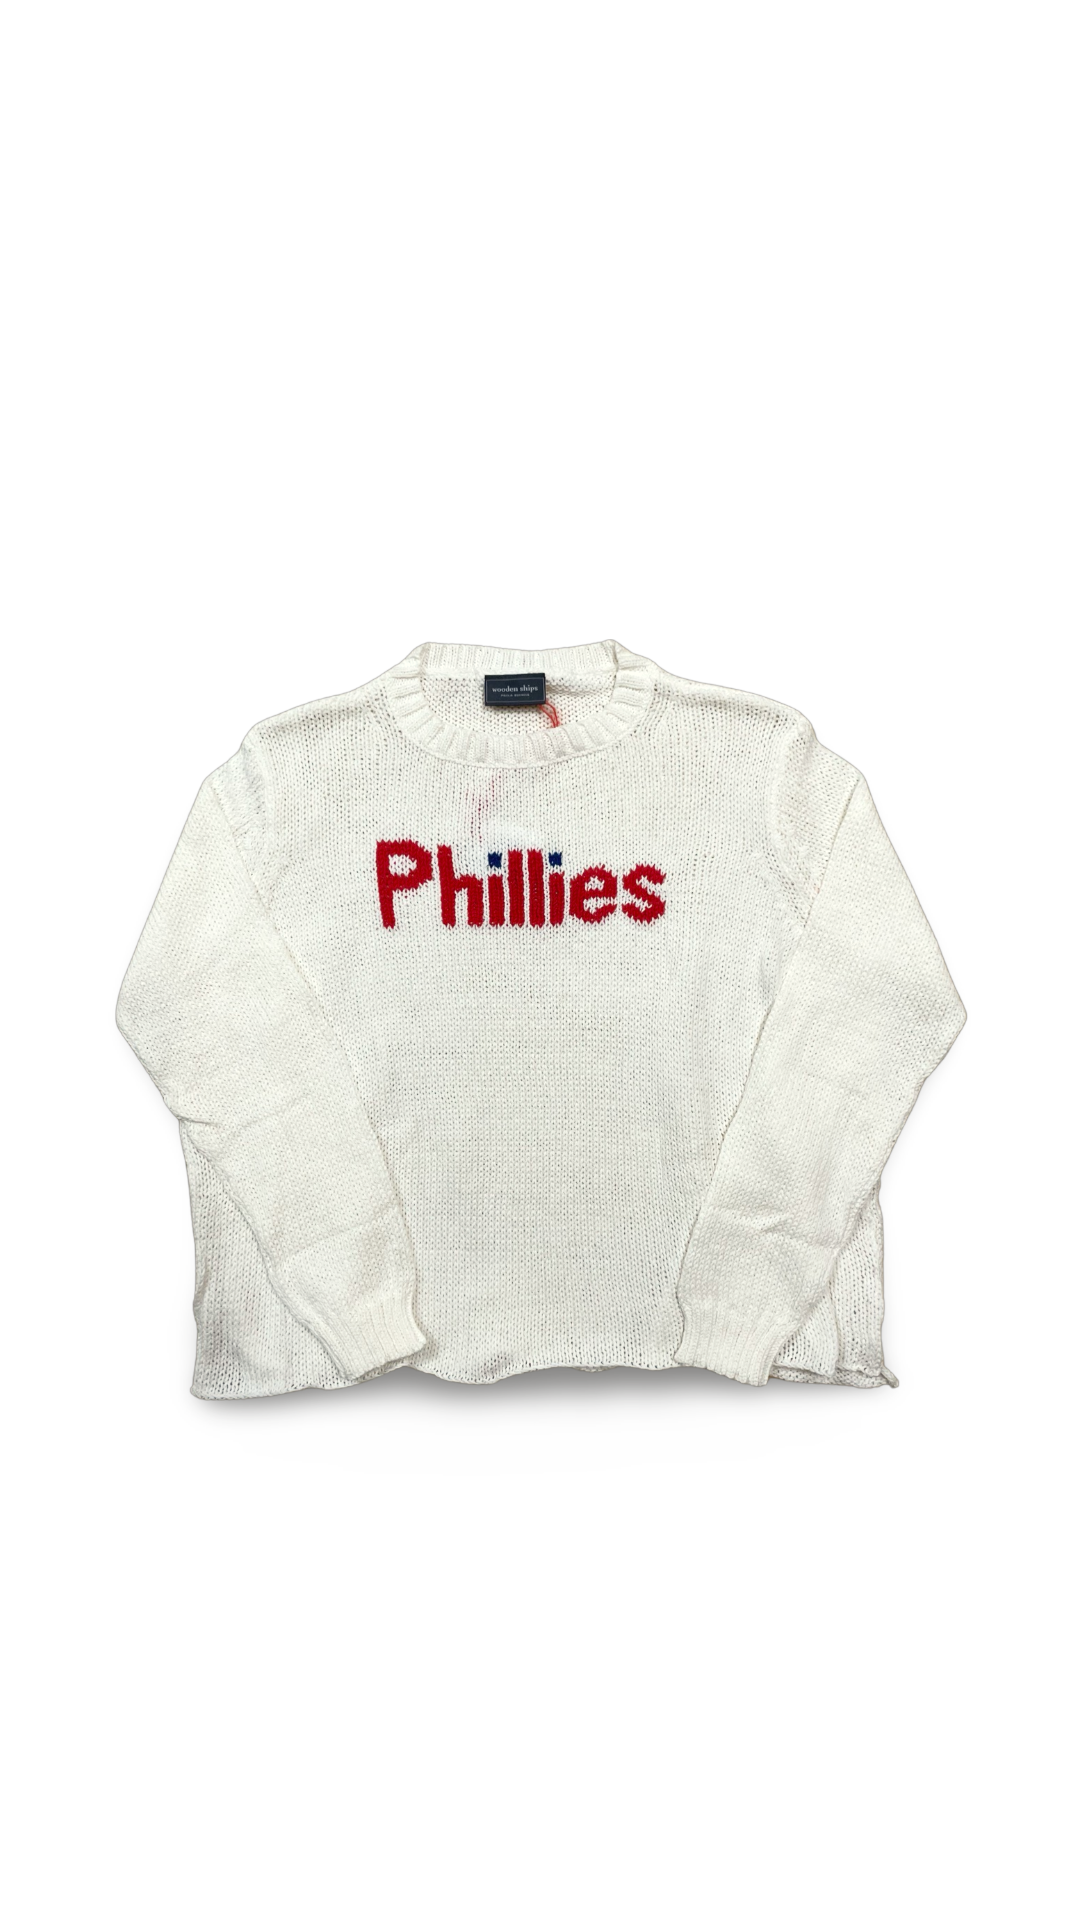 WOODEN SHIPS Women's Phillies Crew Cotton Sweater Breaker White